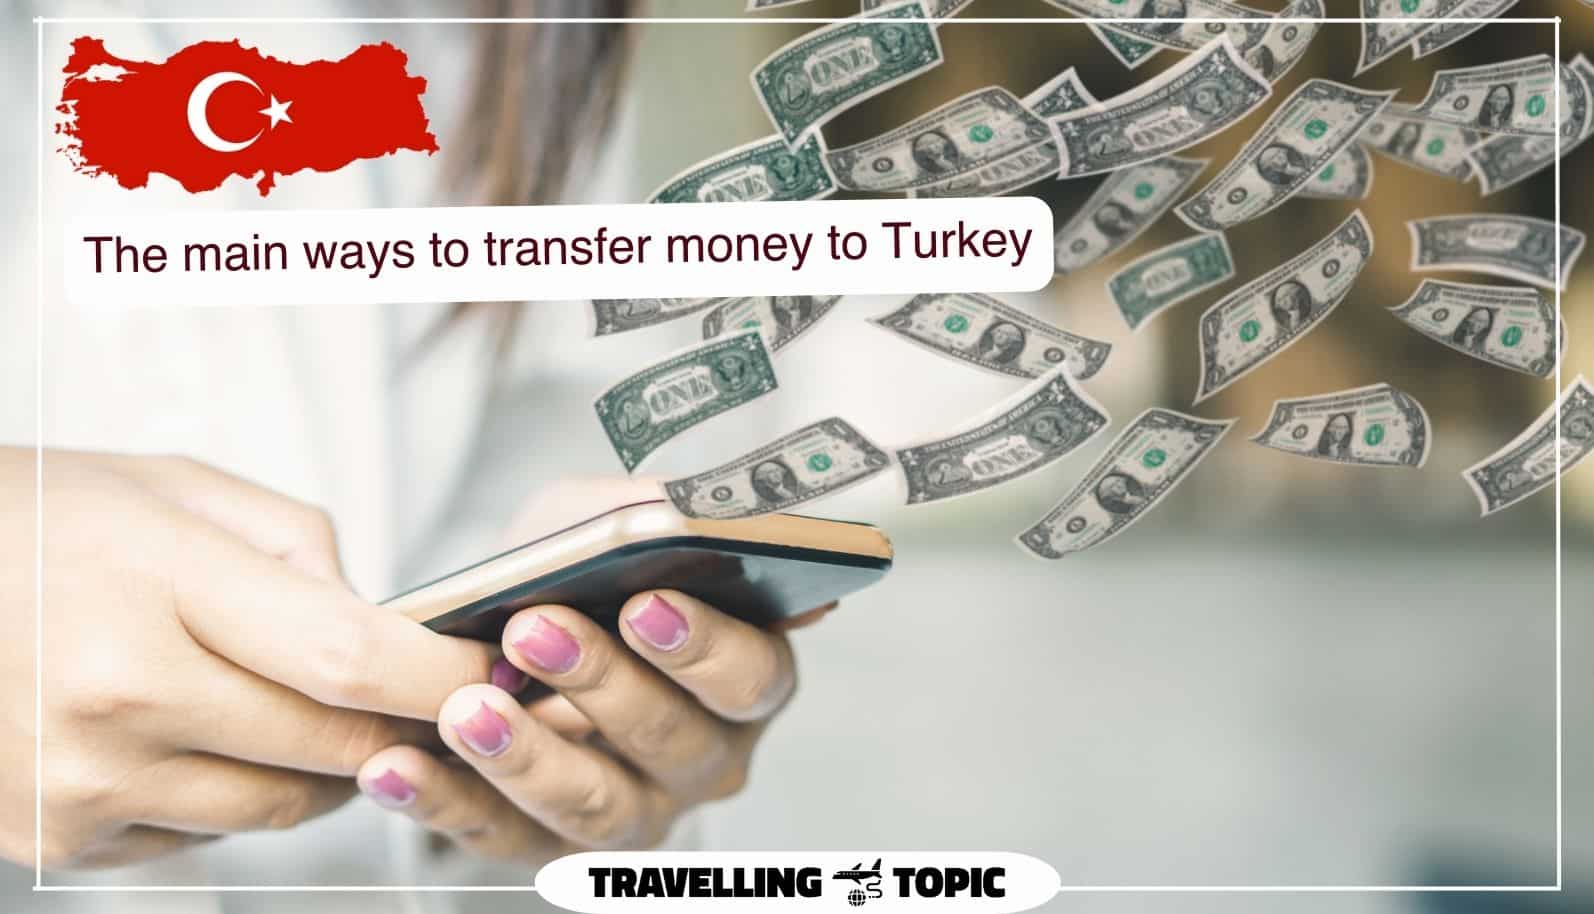 The main ways to transfer money to Turkey